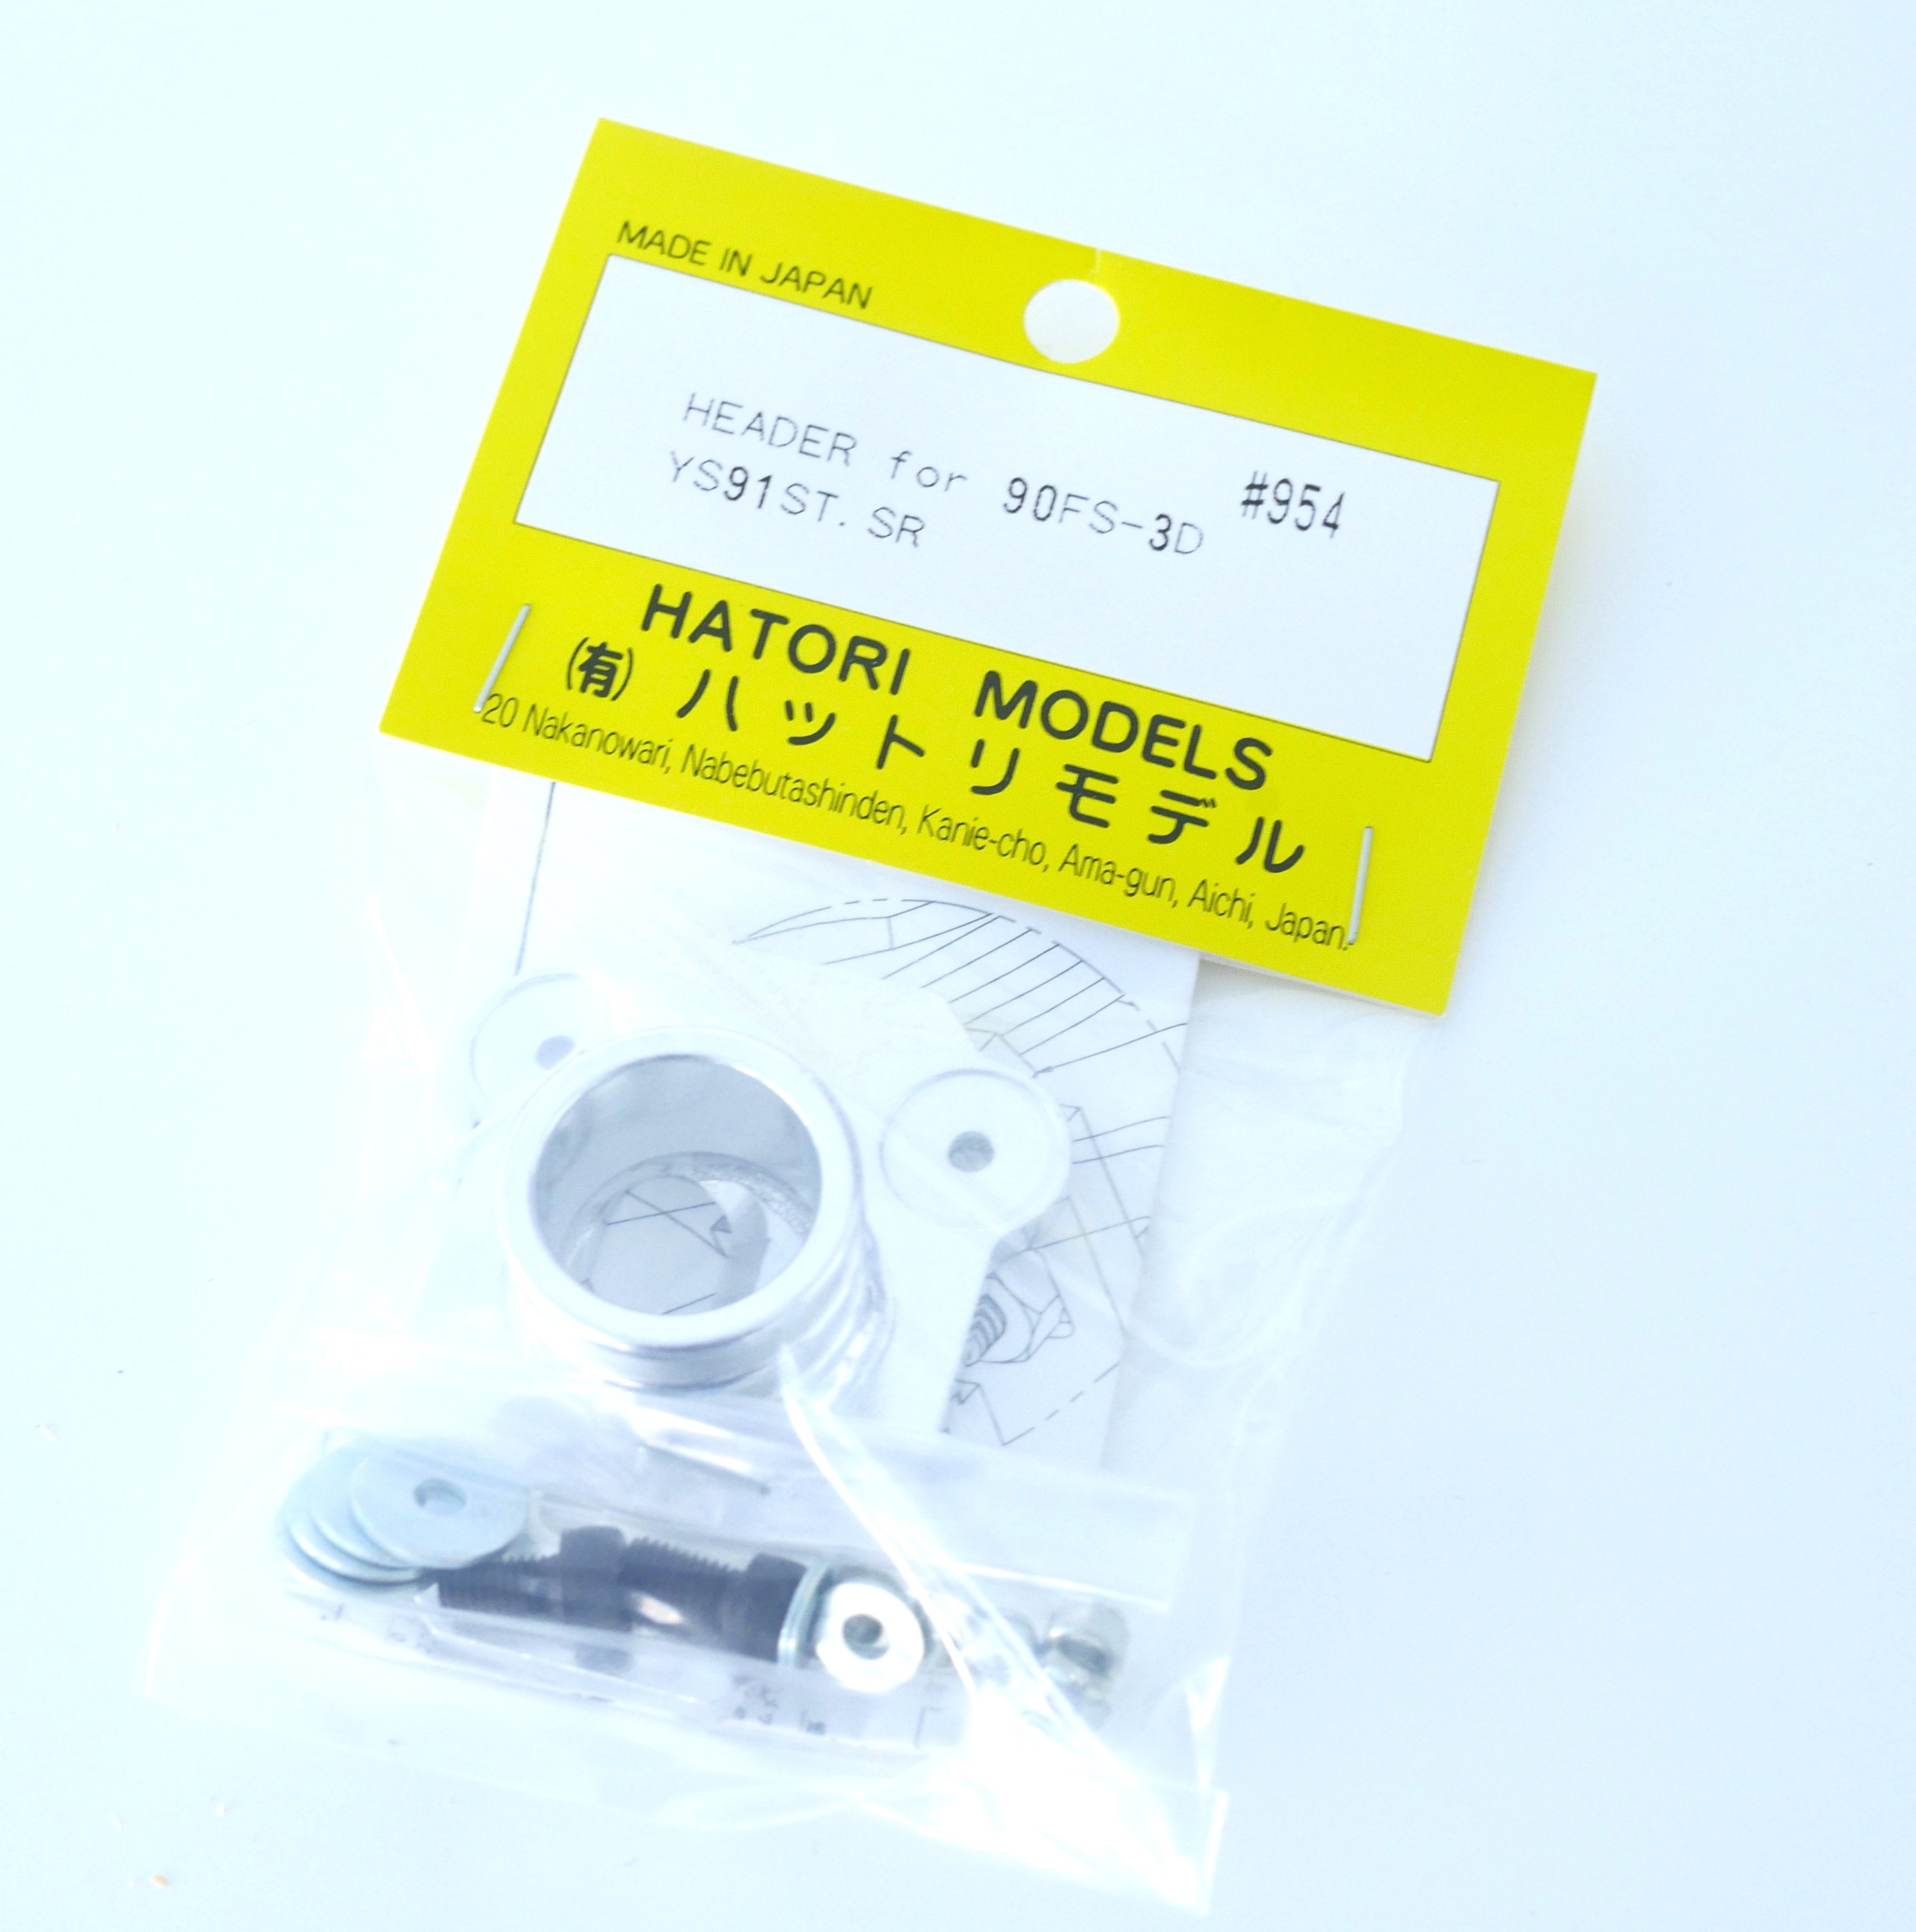 Hatori Header for 937,946 (YS91ST. SR)